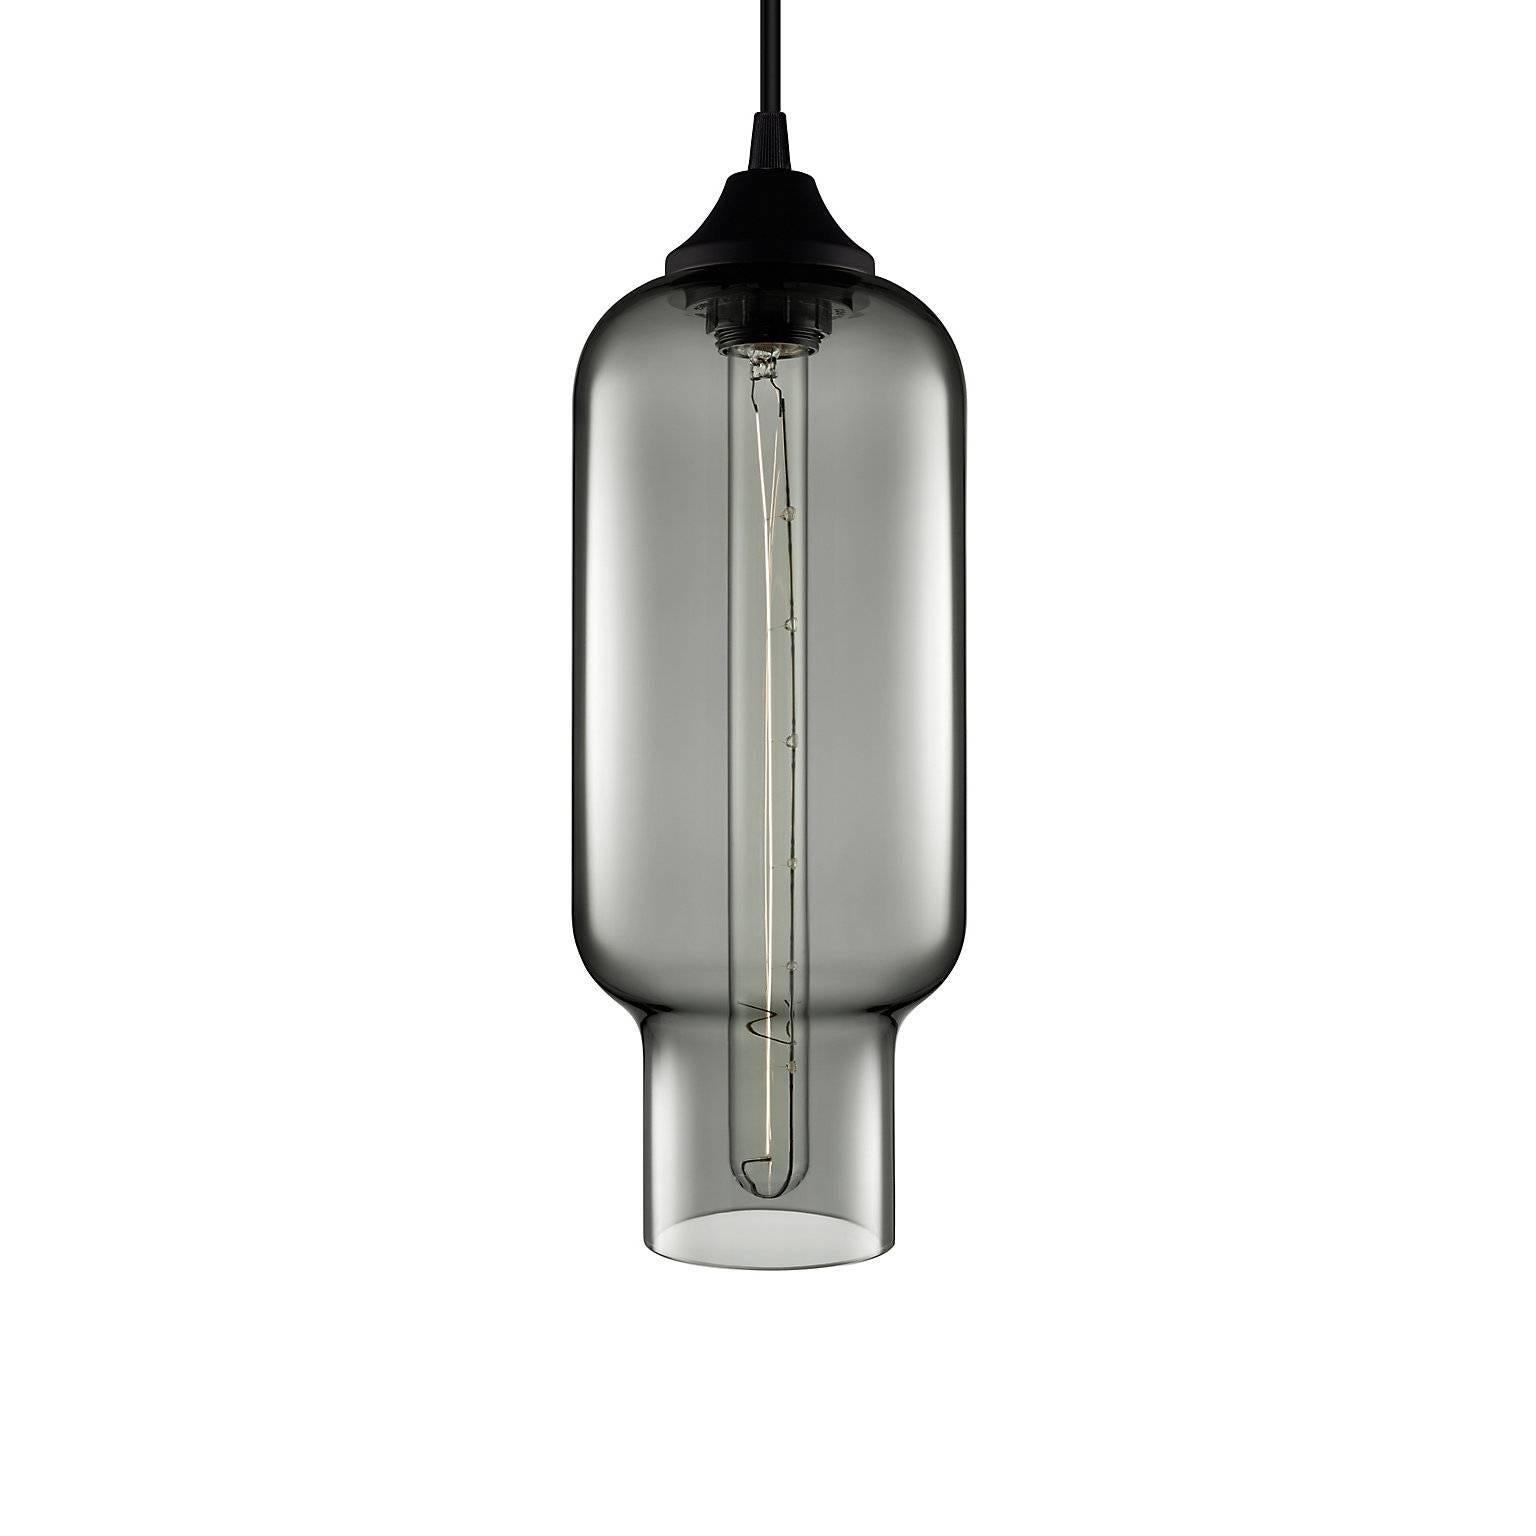 Pharos Smoke Lámpara colgante moderna de cristal soplado a mano, fabricada en EE.UU. Estadounidense en venta